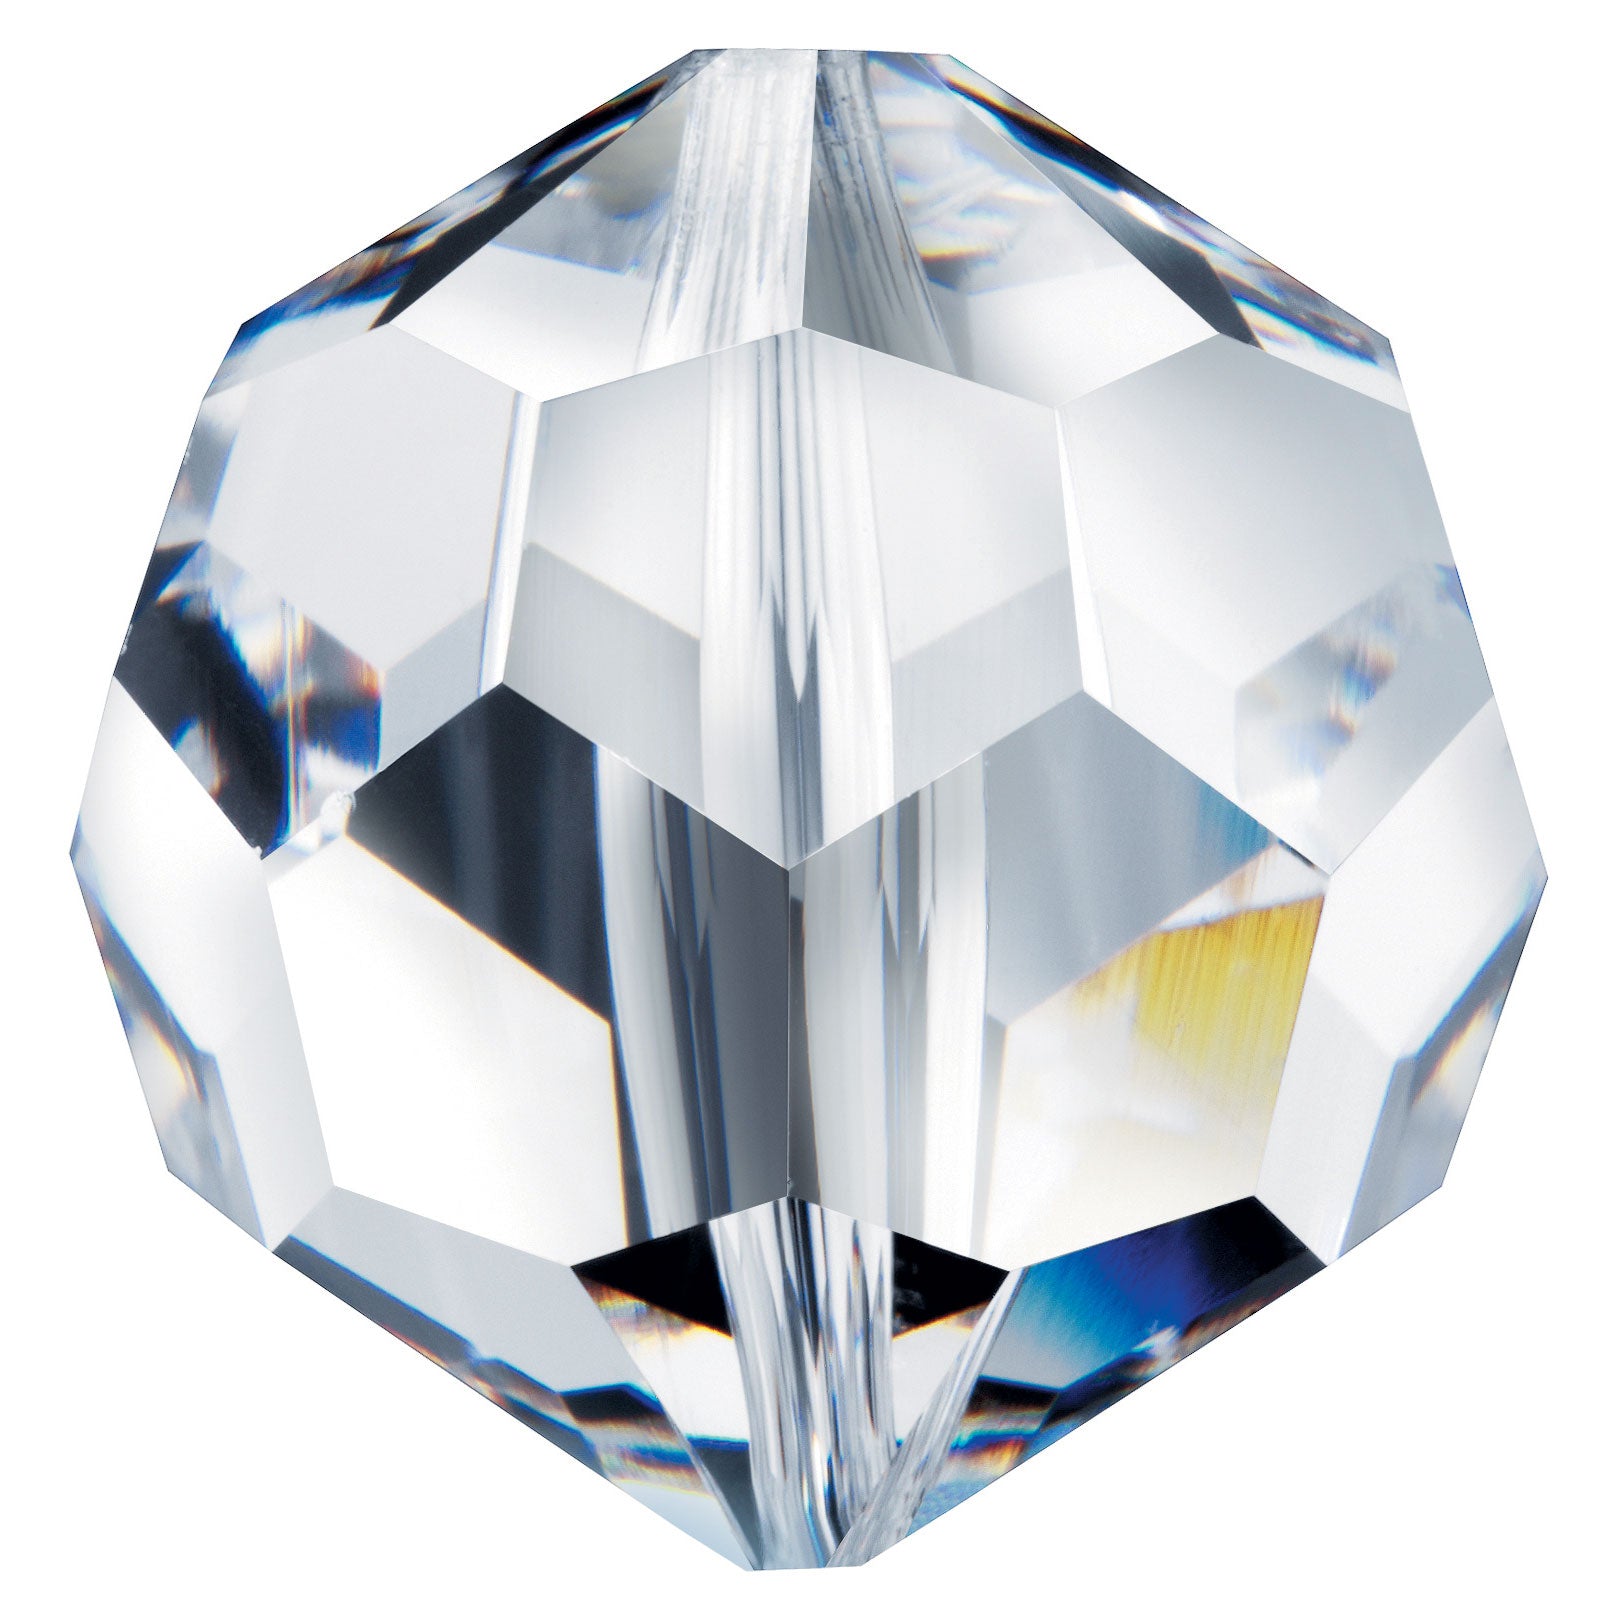 Crystal Garland Swarovski Spectra Crystal 8mm Faceted Bead Prisms